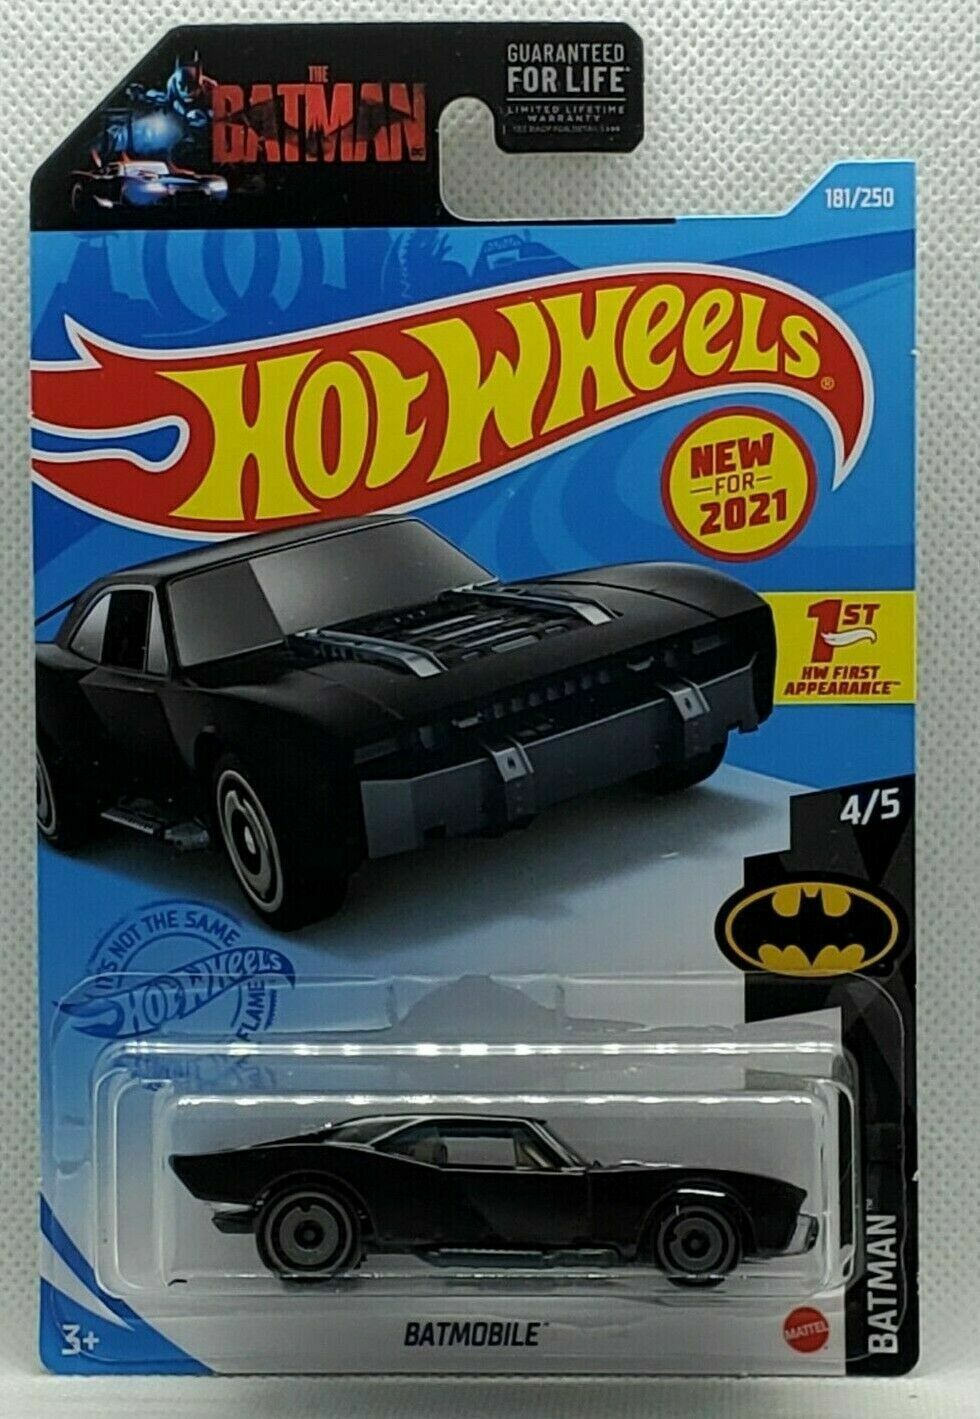 Make:#181 Batmobile (HW First Appearance) 4/5 Batman:2021 Hot Wheels Cars Main Line Series Newest Cases You Pick Brand New Hot Wheels